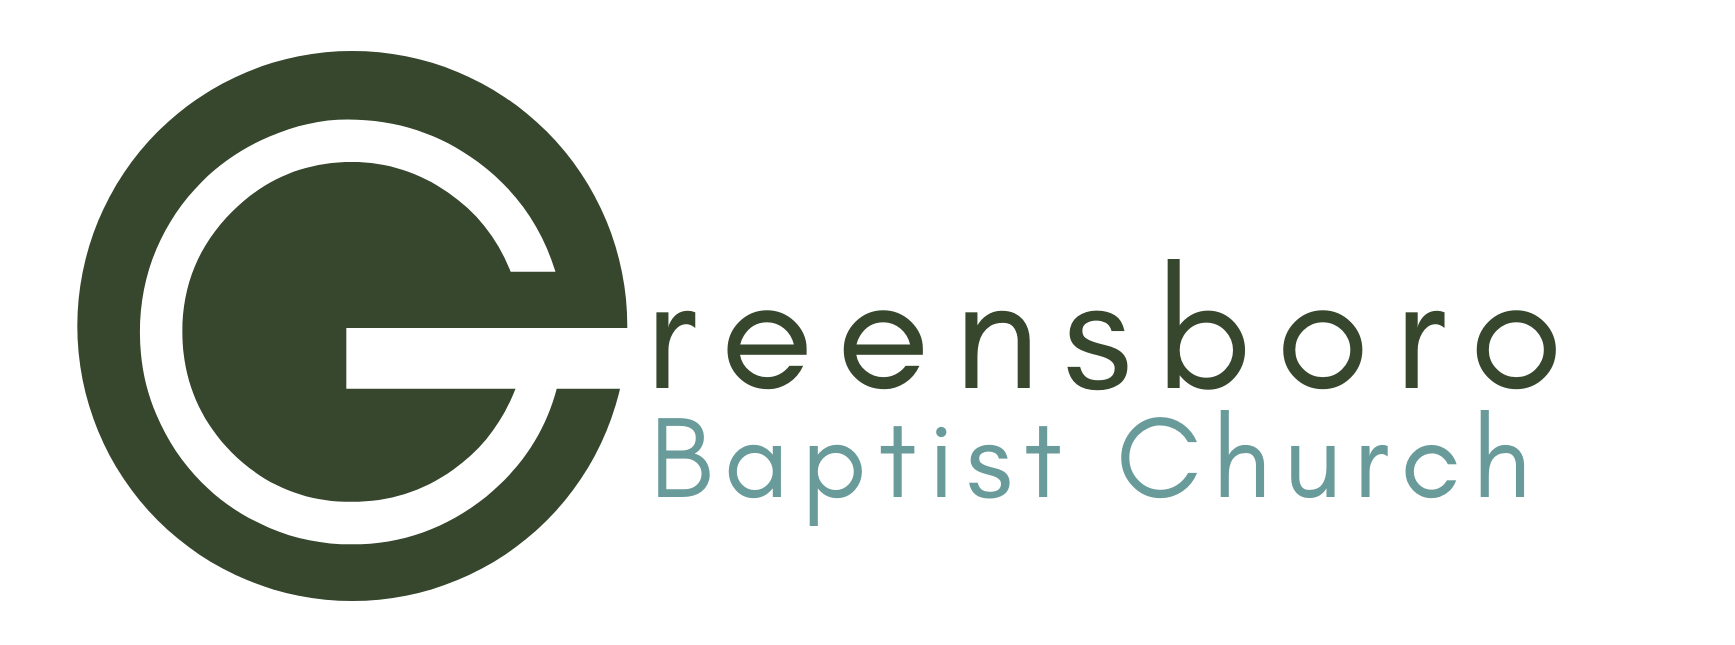 Greensboro Baptist Church